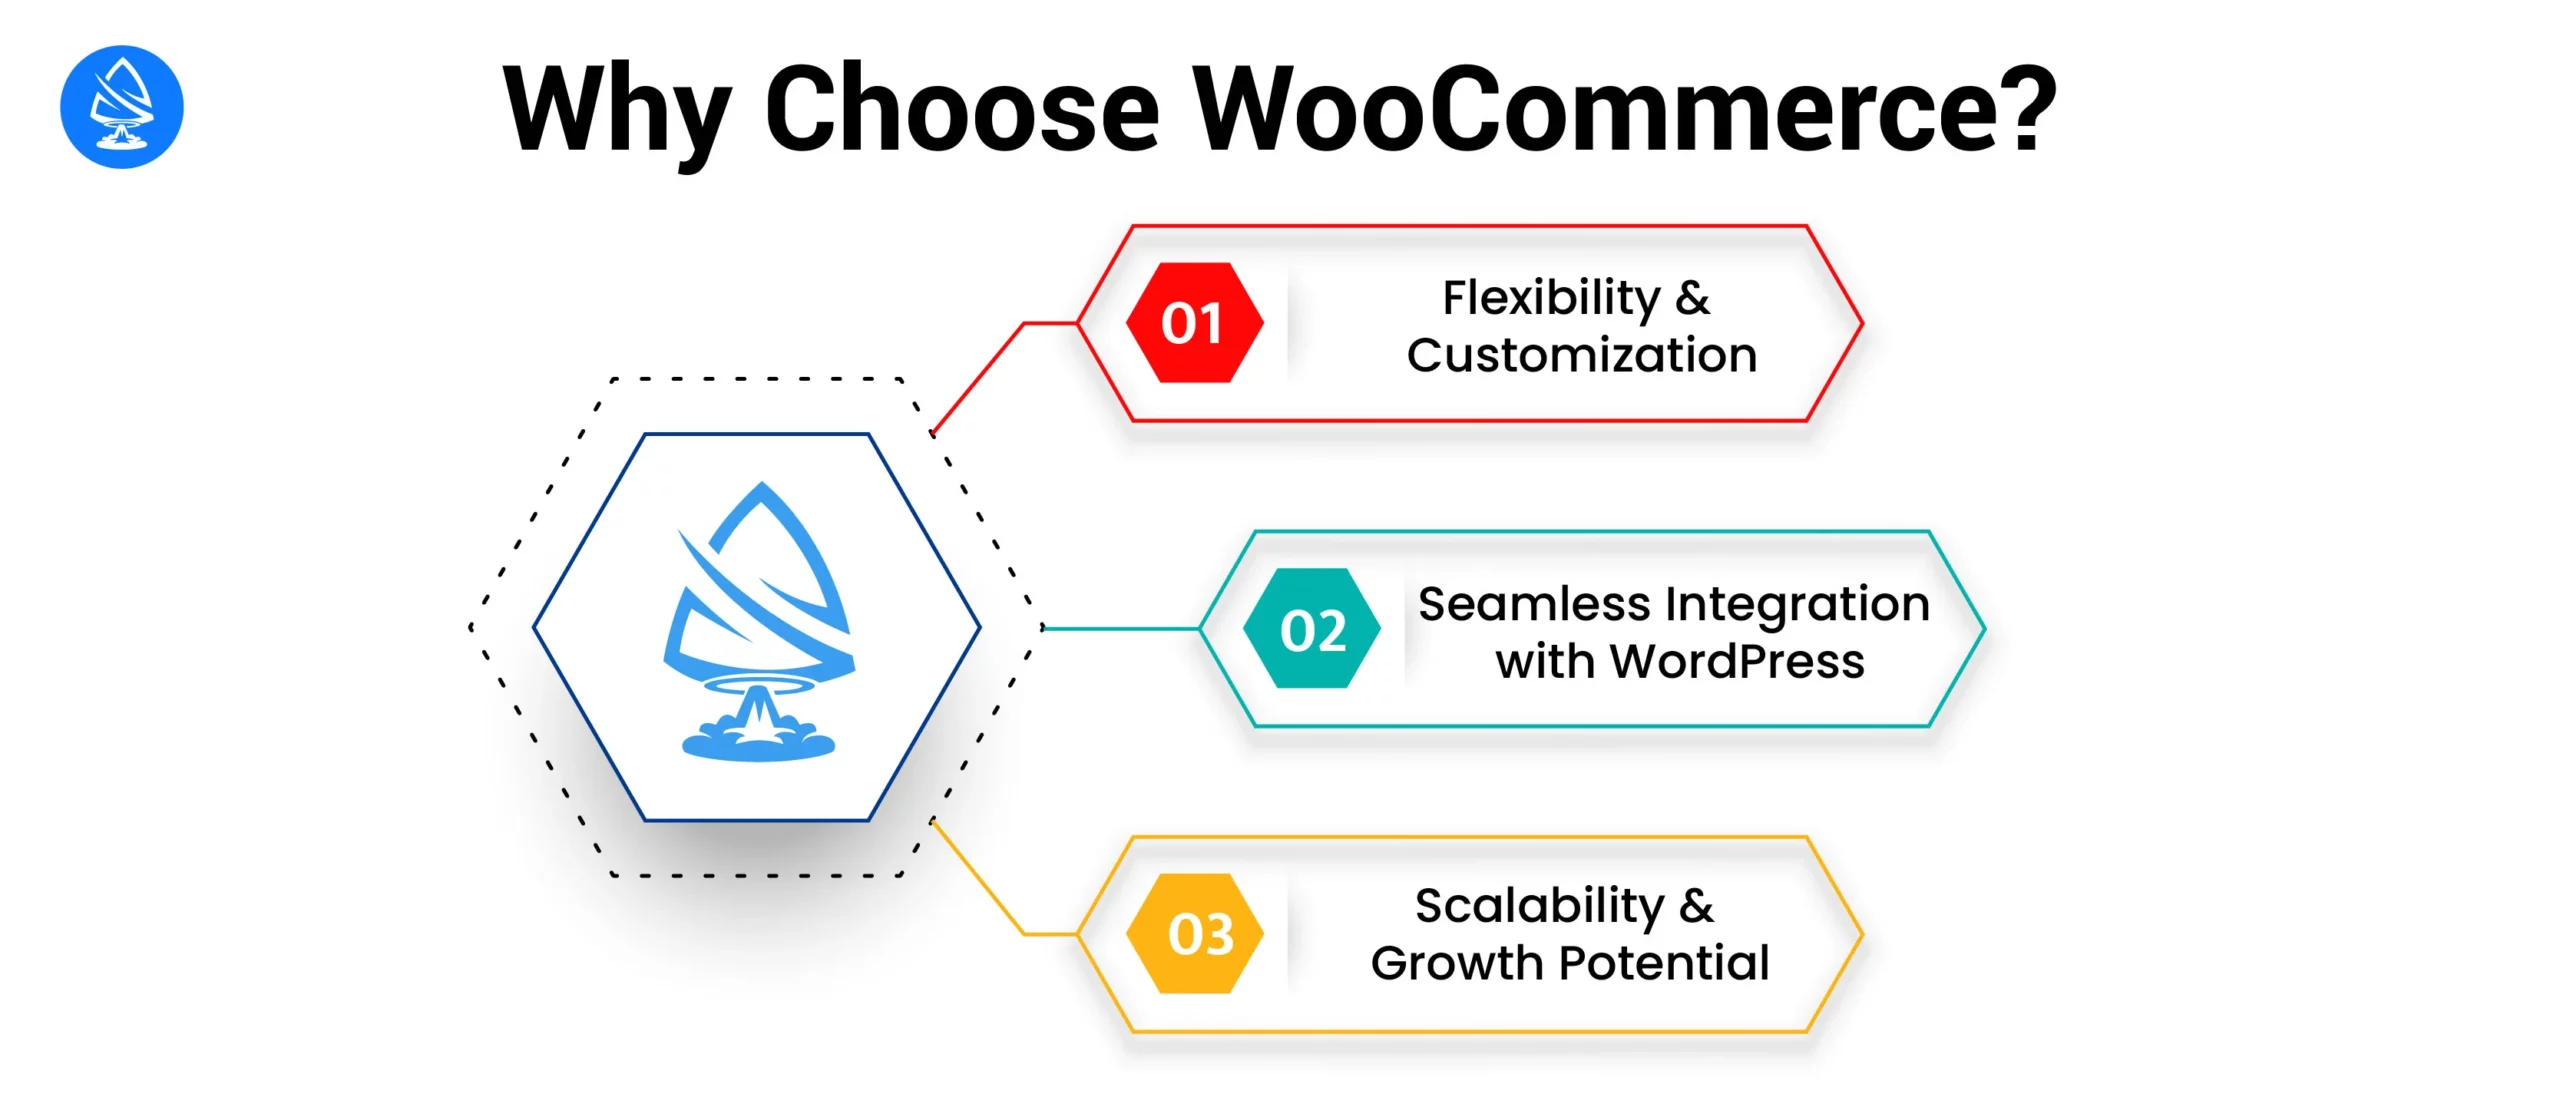 Why Choose WooCommerce